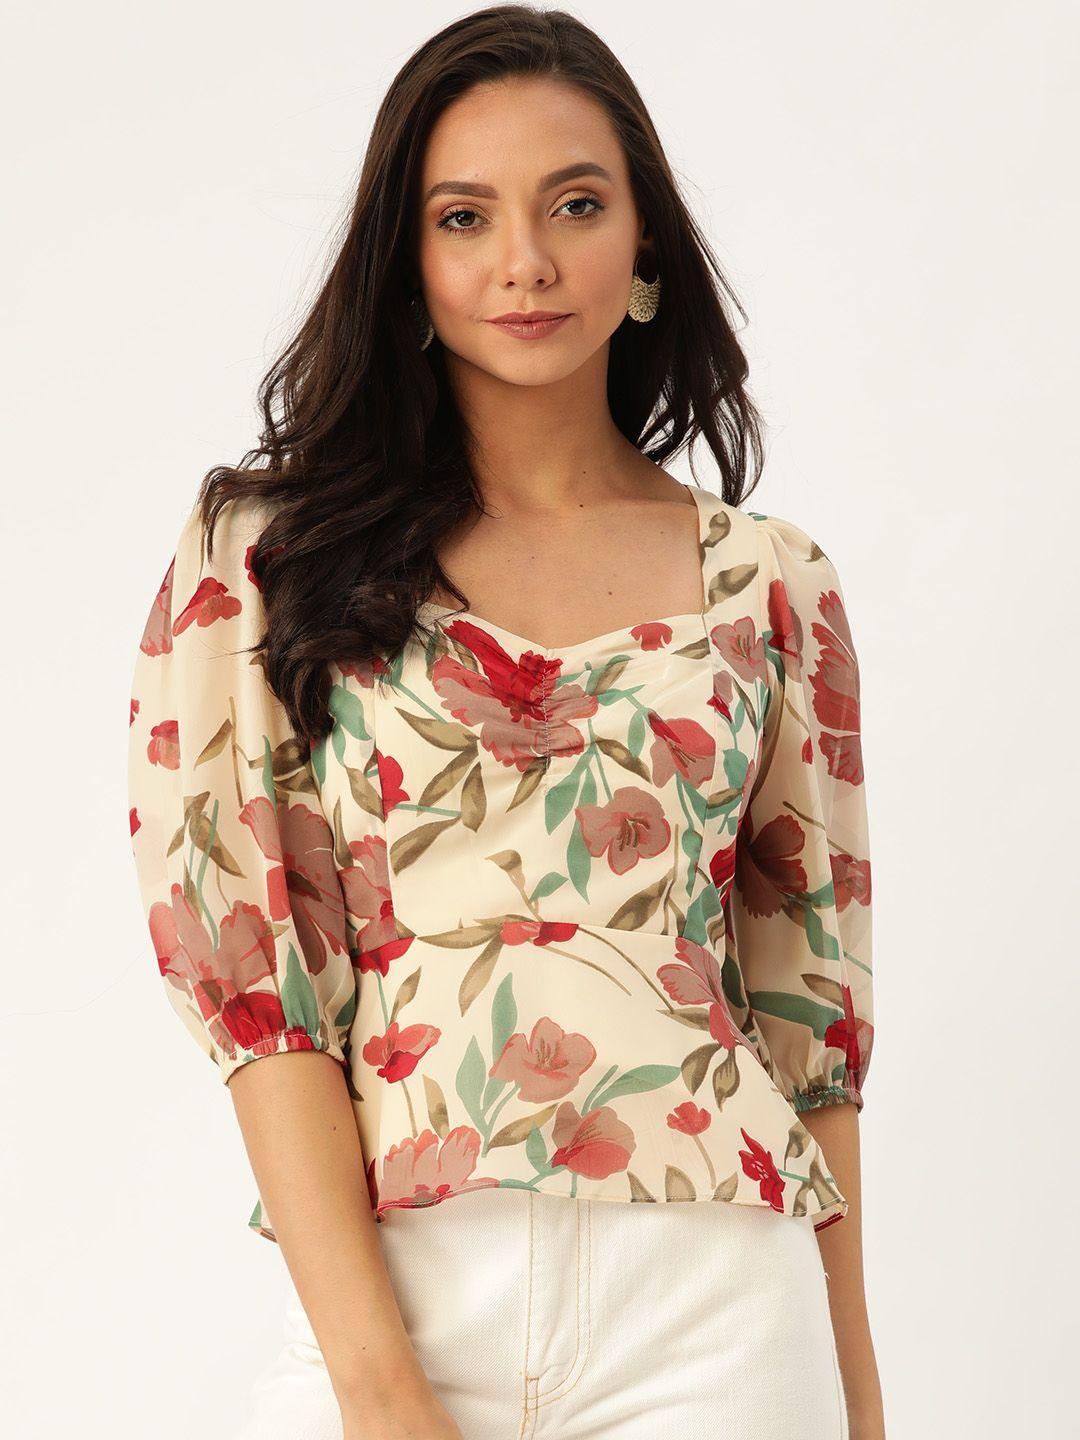 20dresses cream-coloured & maroon floral semi-sheer a-line top